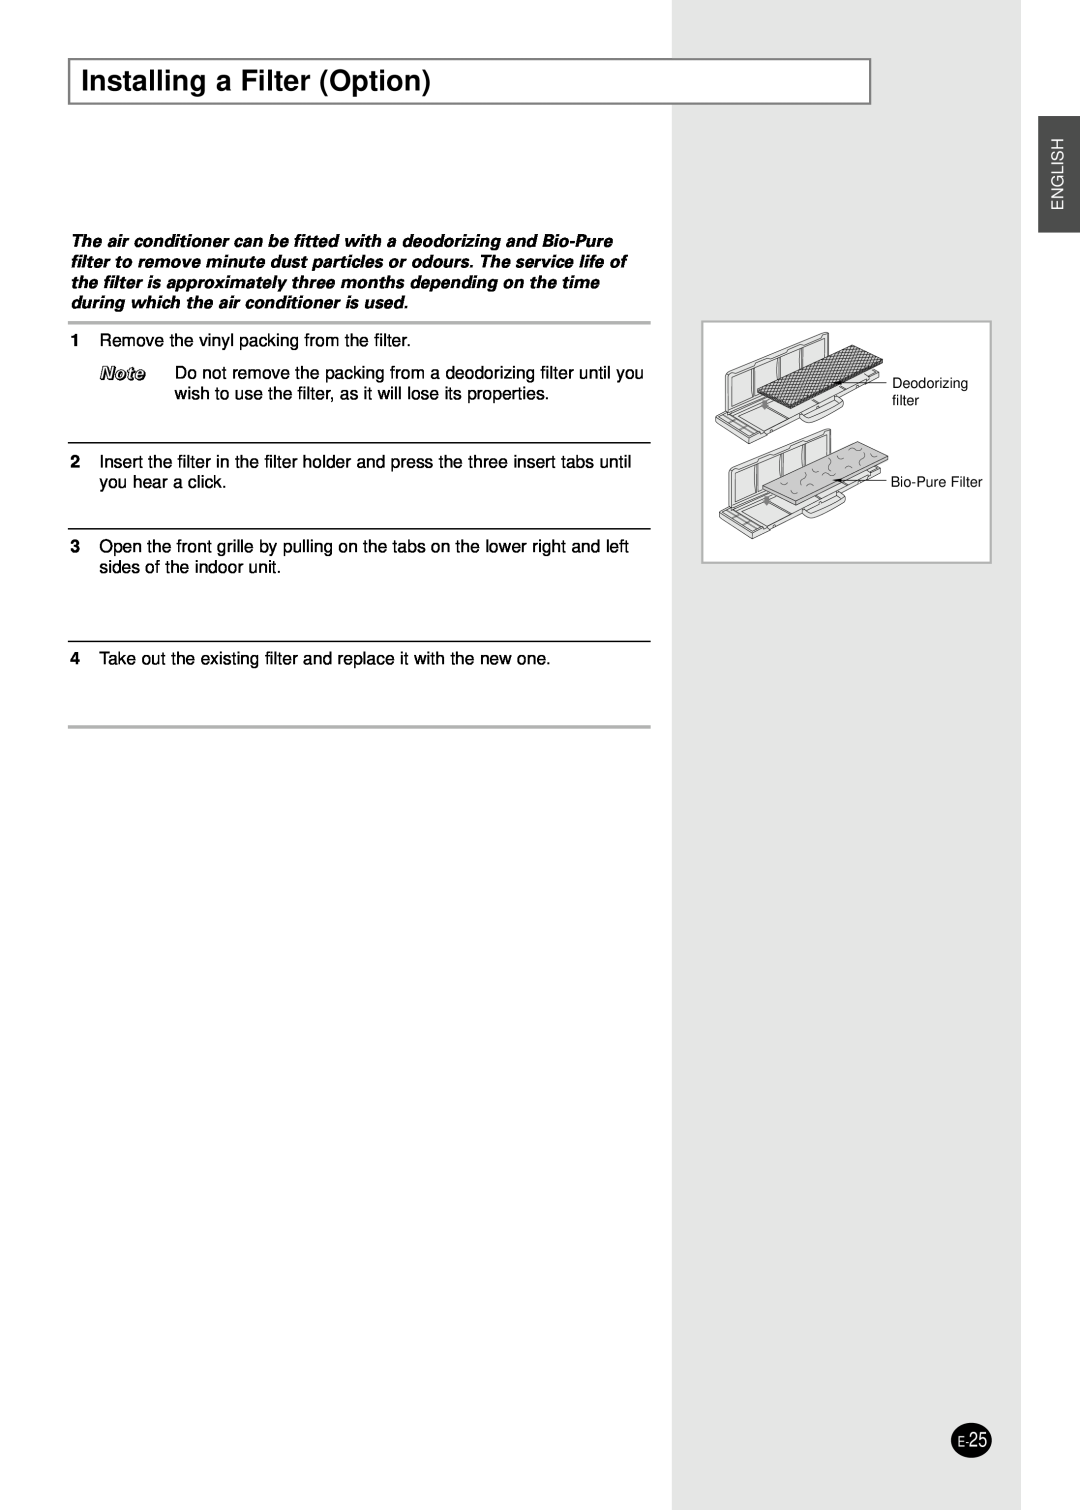 Samsung AD18B1C09 installation manual Installing a Filter Option, English 